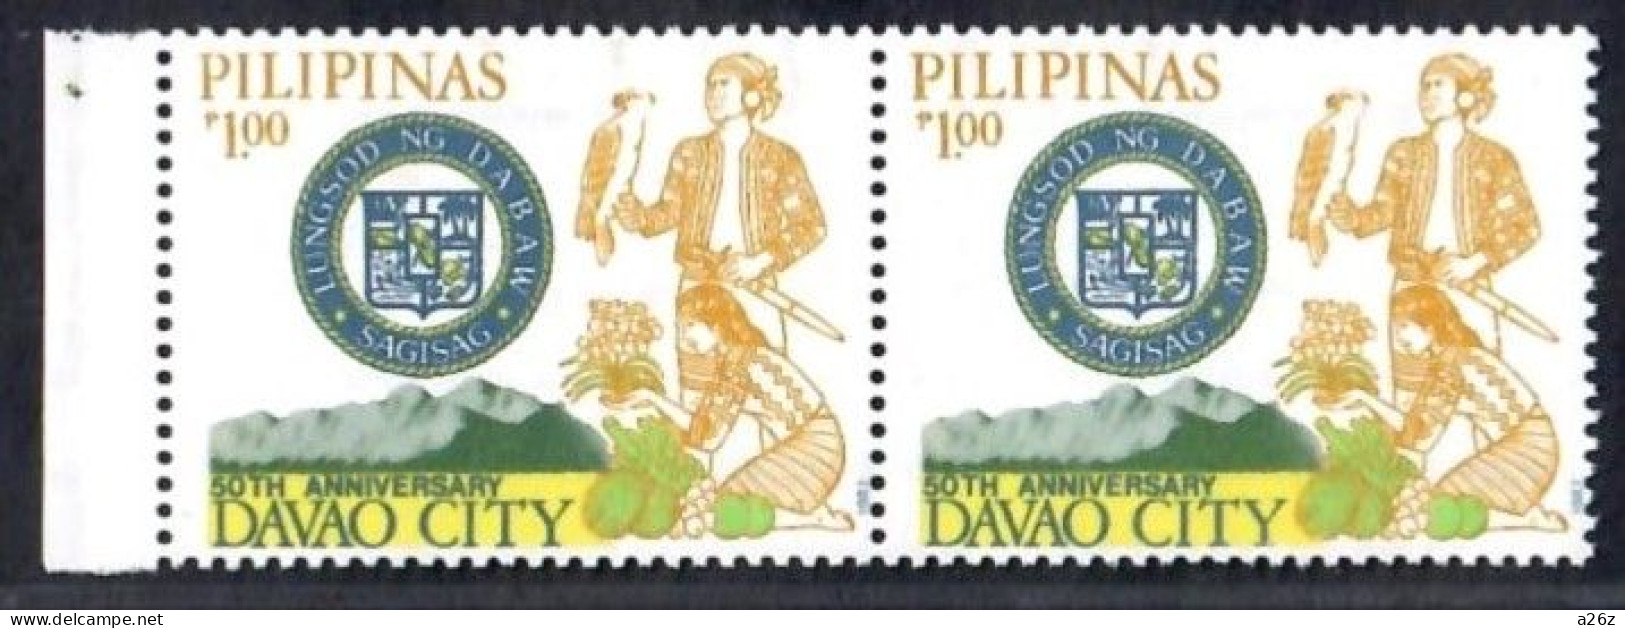 Philippines 1987 Davao City, 50th Anniv. Falconer, Woman Planting Etc. Marginal Horiz. Pair 1X 2V MNH - Philippines